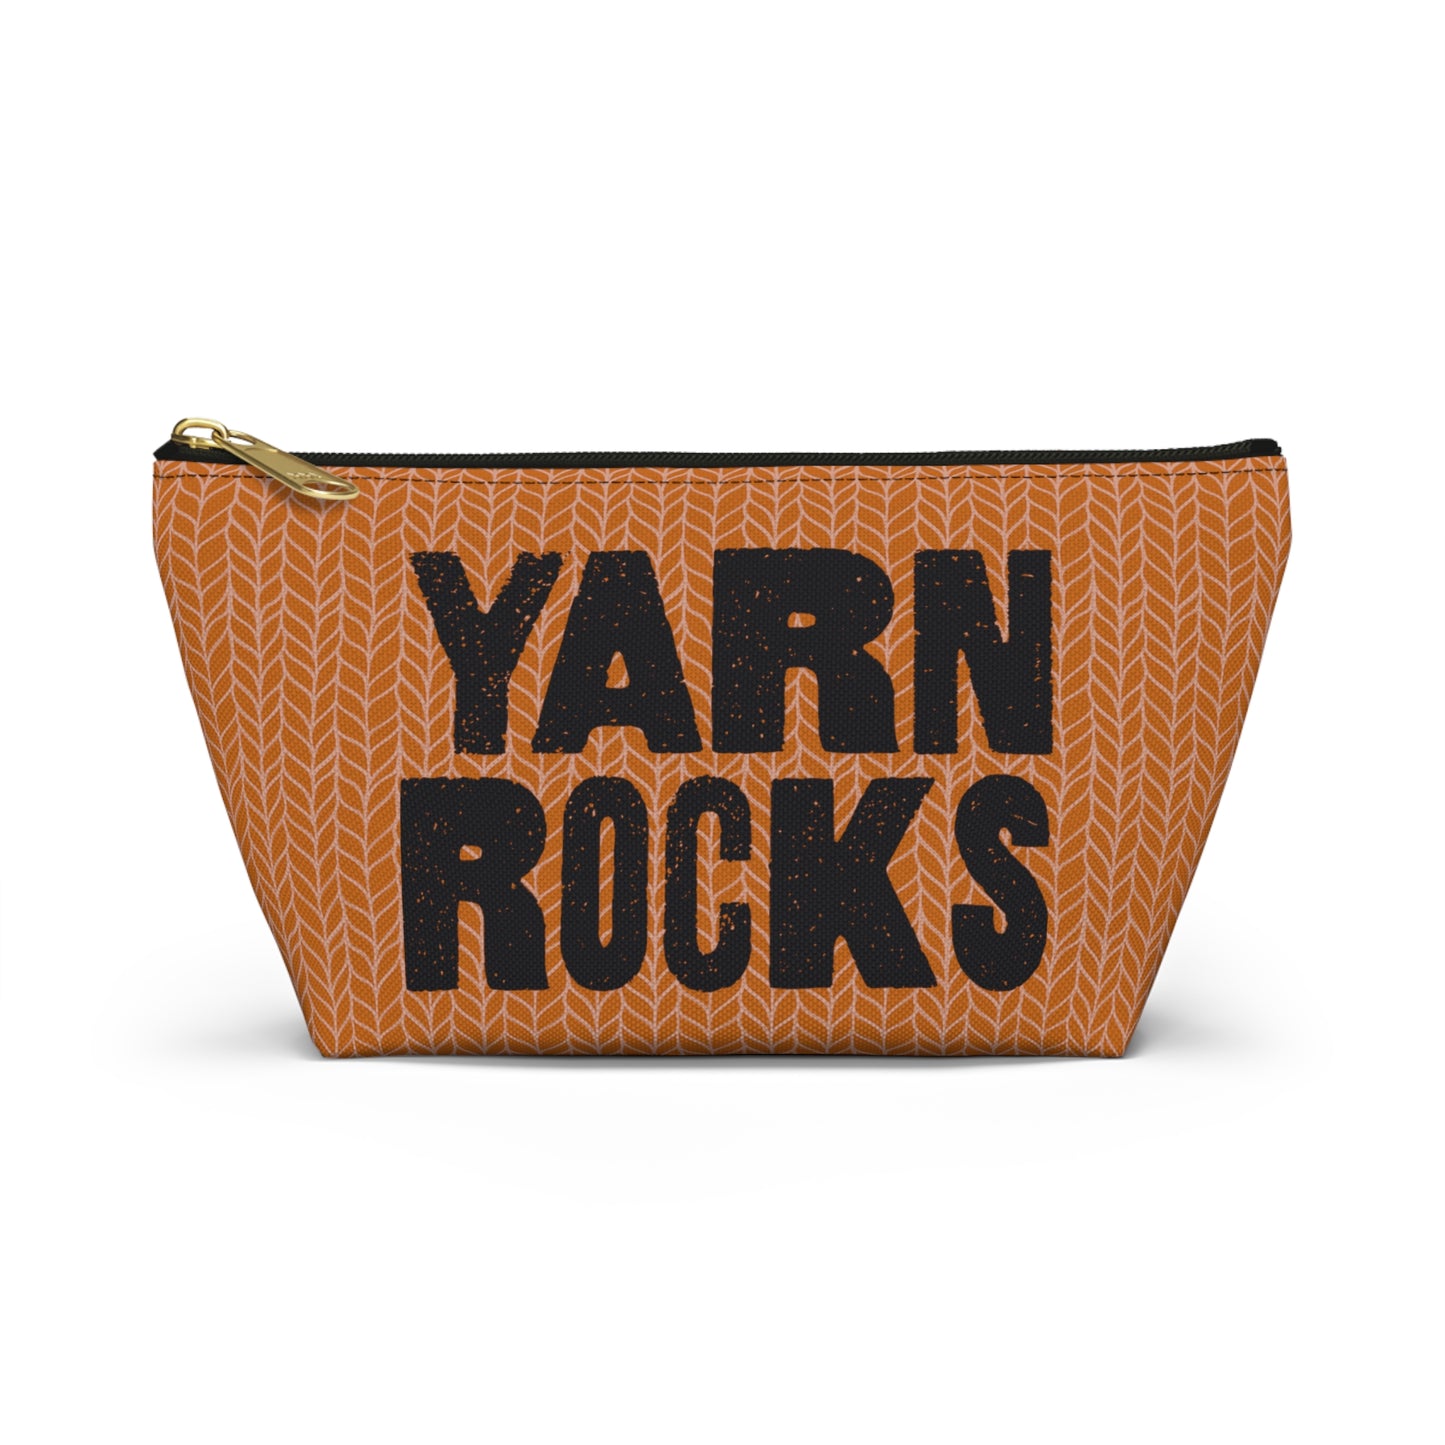 Yarn Rocks Mini Zippered Project Bags